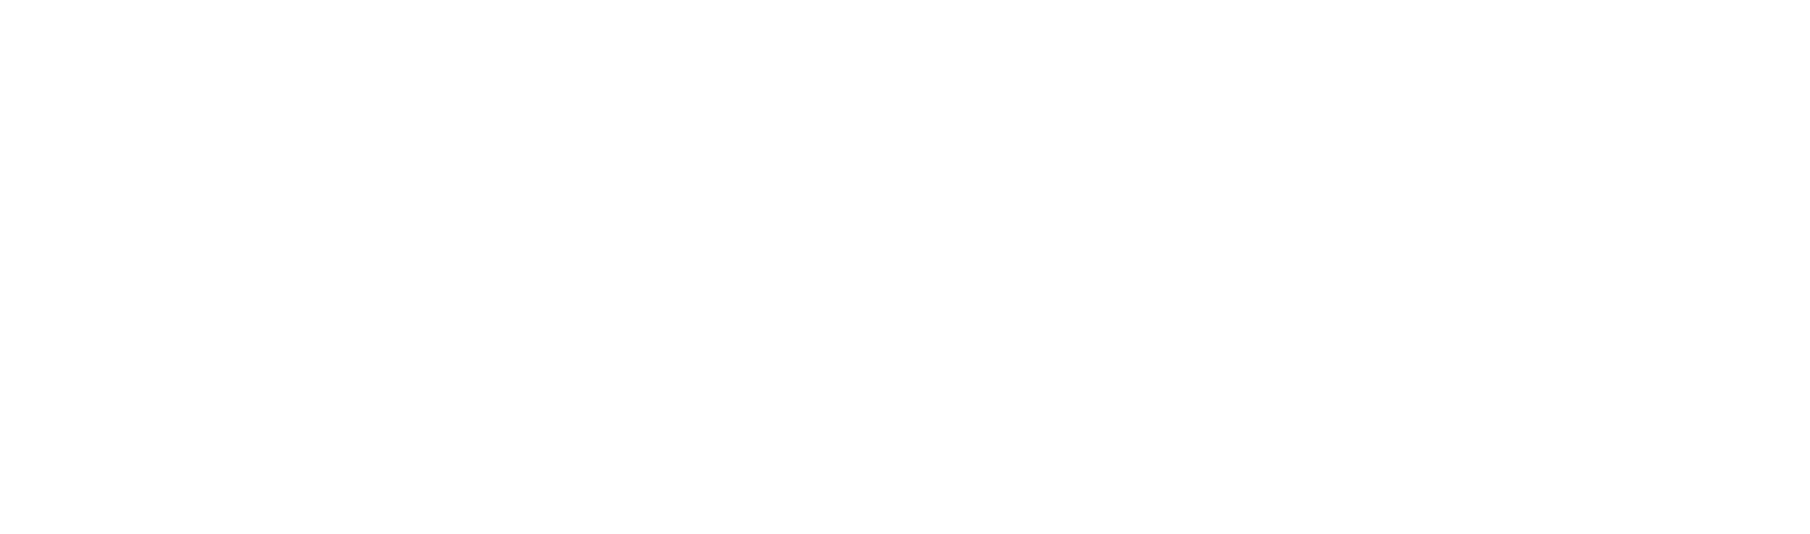 logo groow blanc